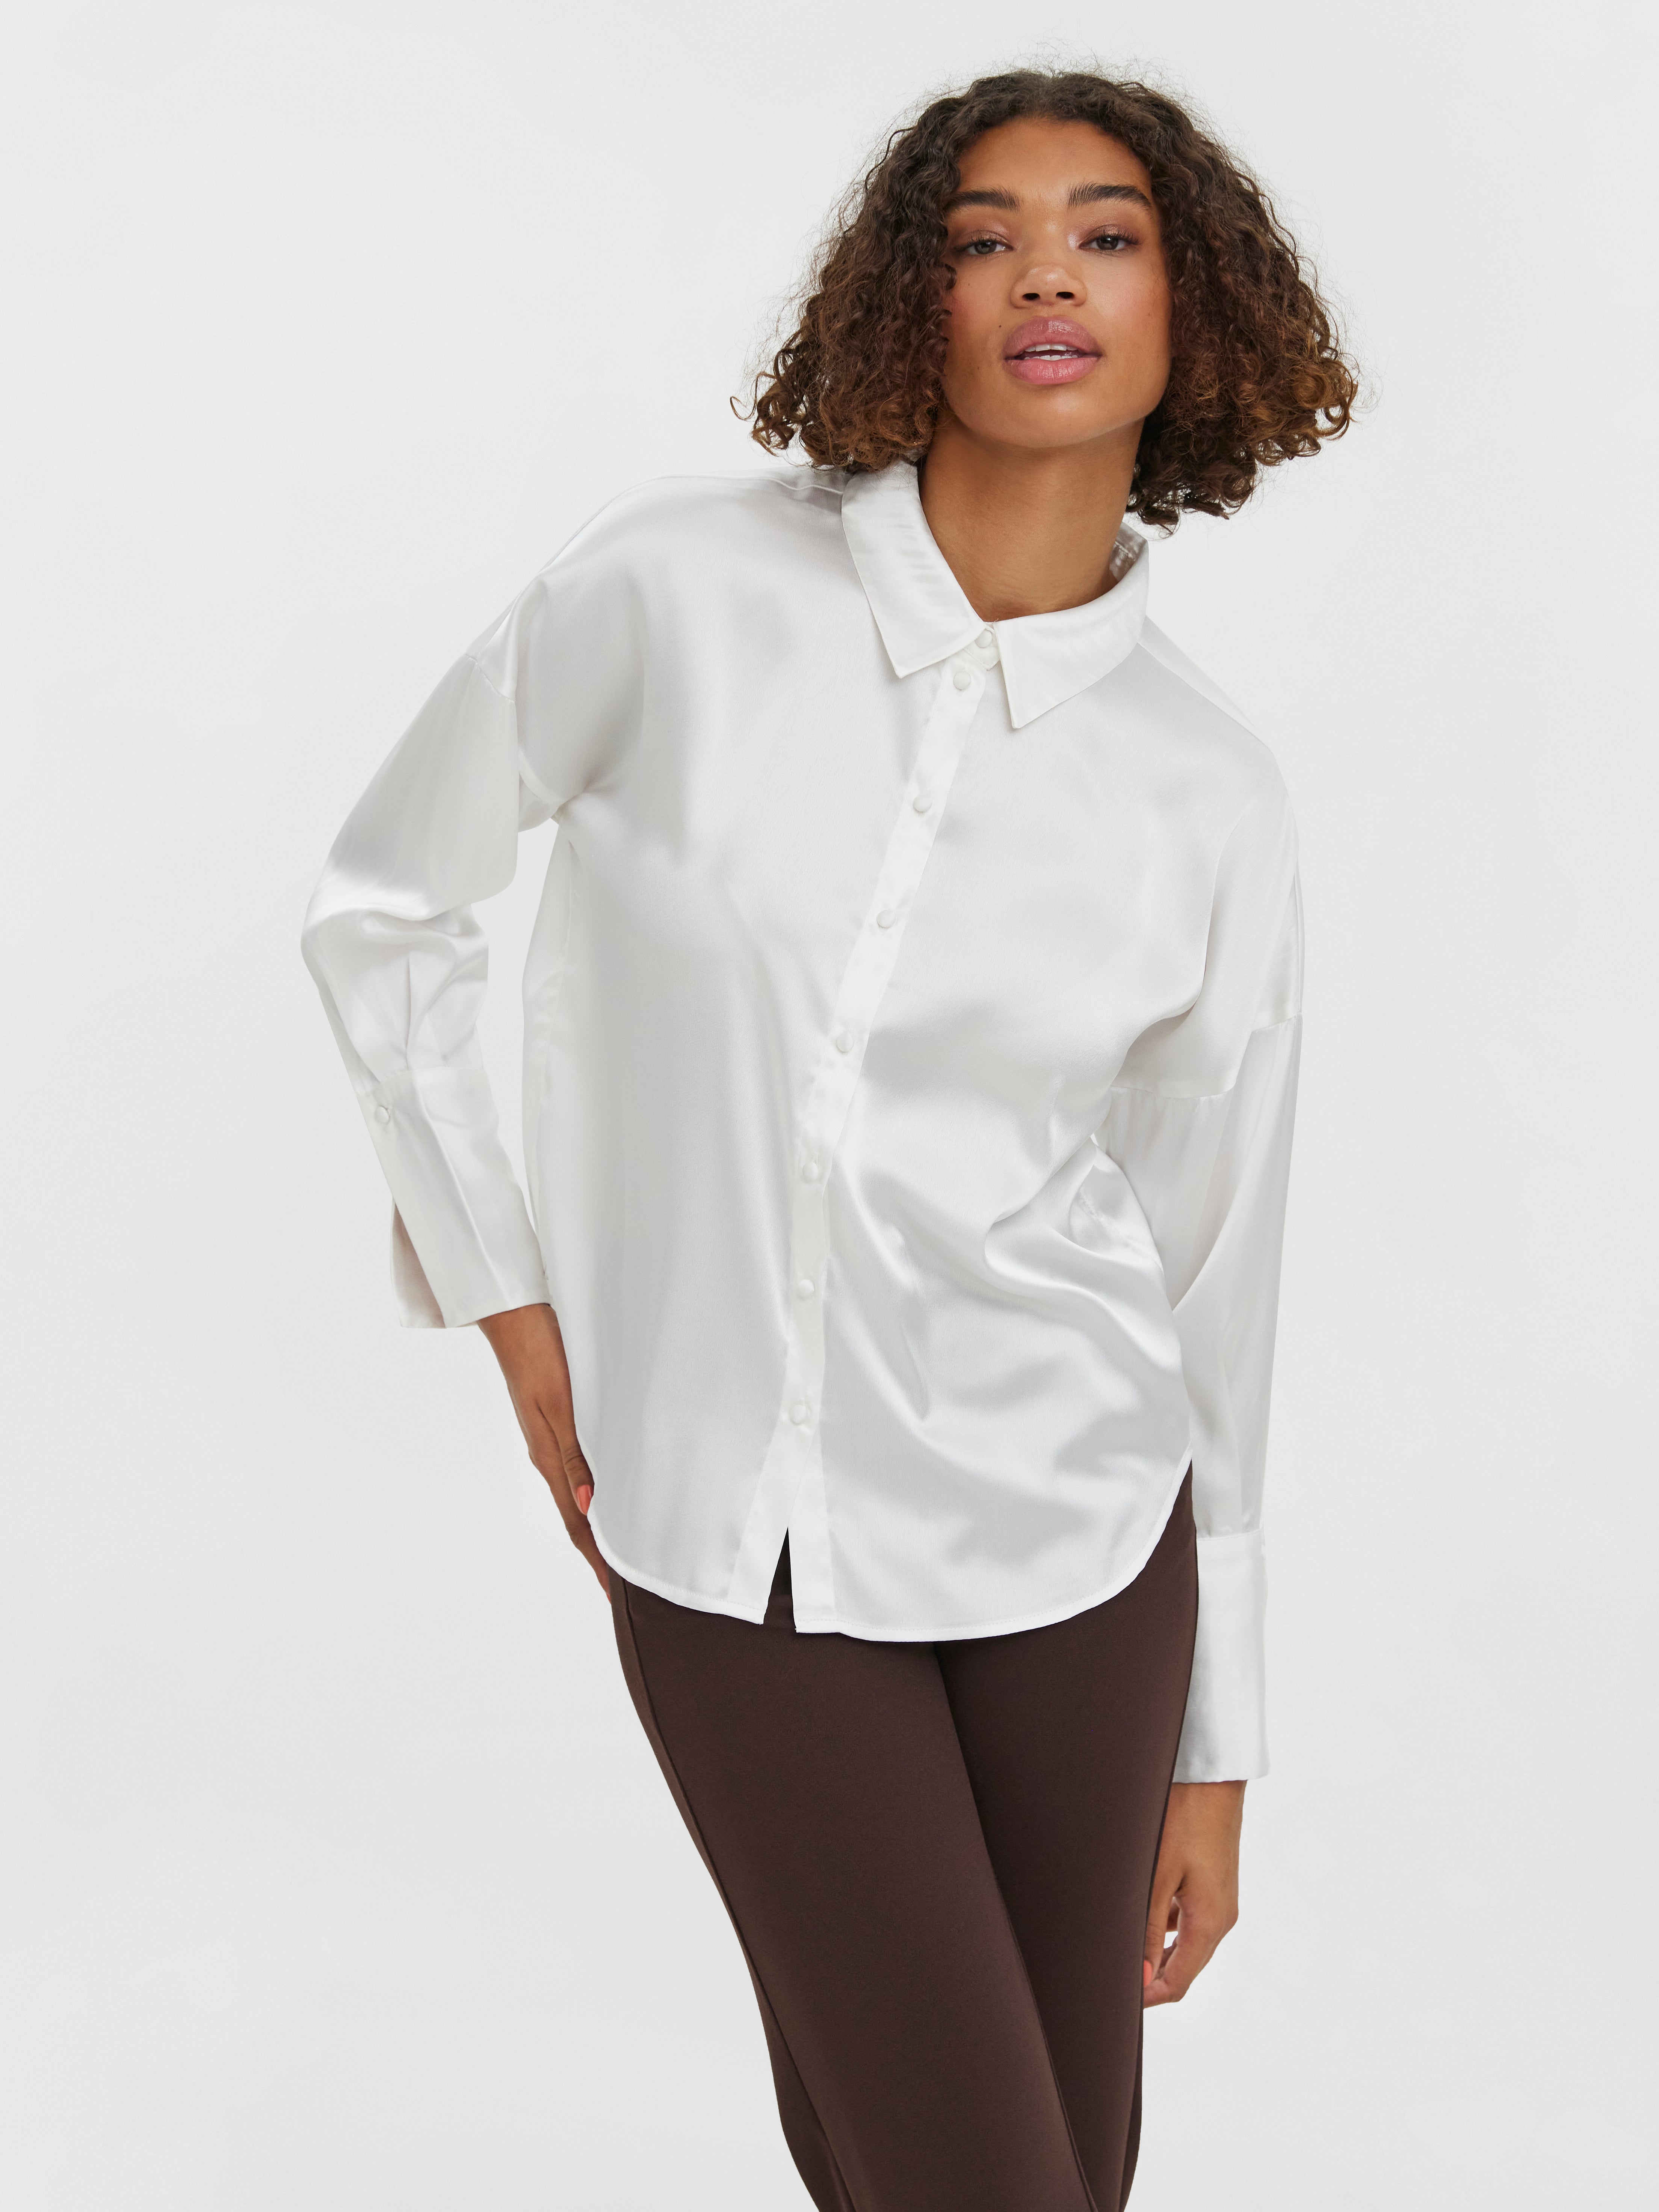 Rabatt 62 % Vero Moda Hemd Weiß M DAMEN Hemden & T-Shirts Hemd Rüschen 